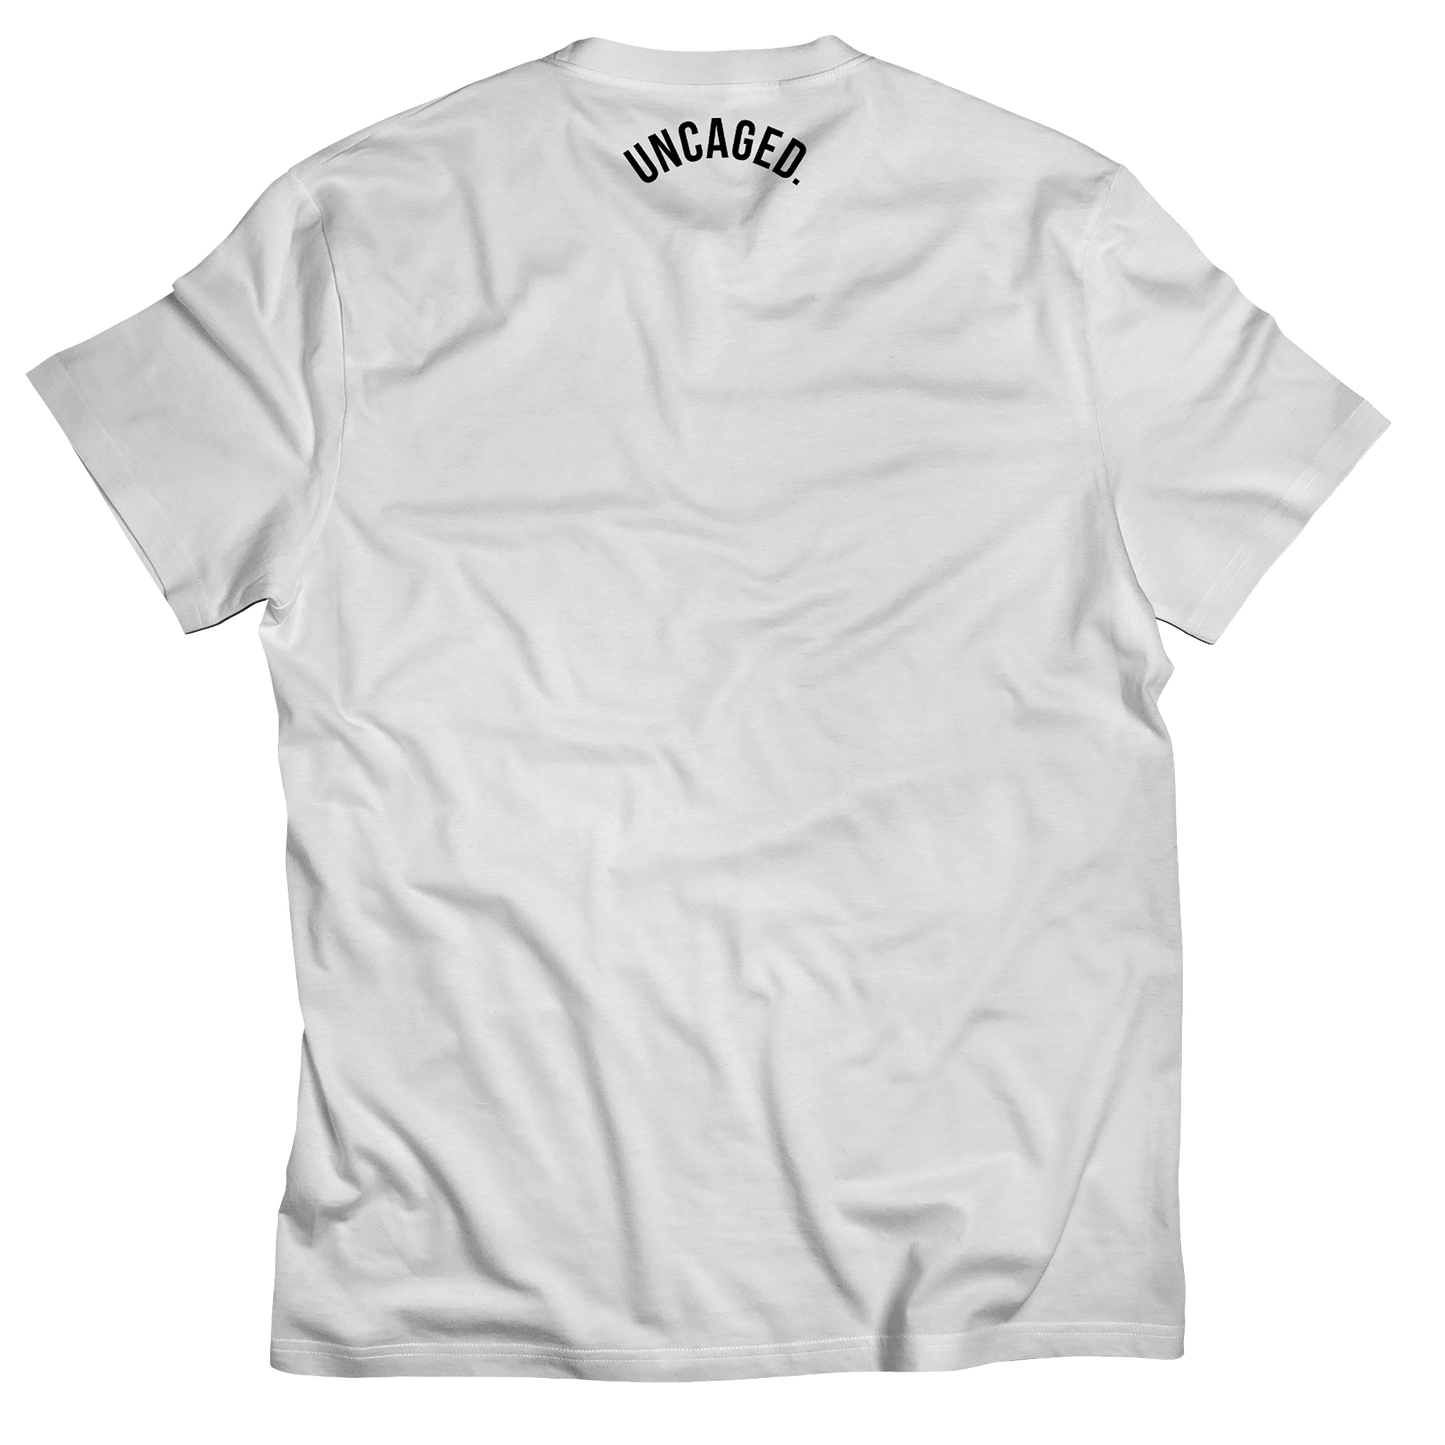 Gameday Vibes T-Shirt - White/Black